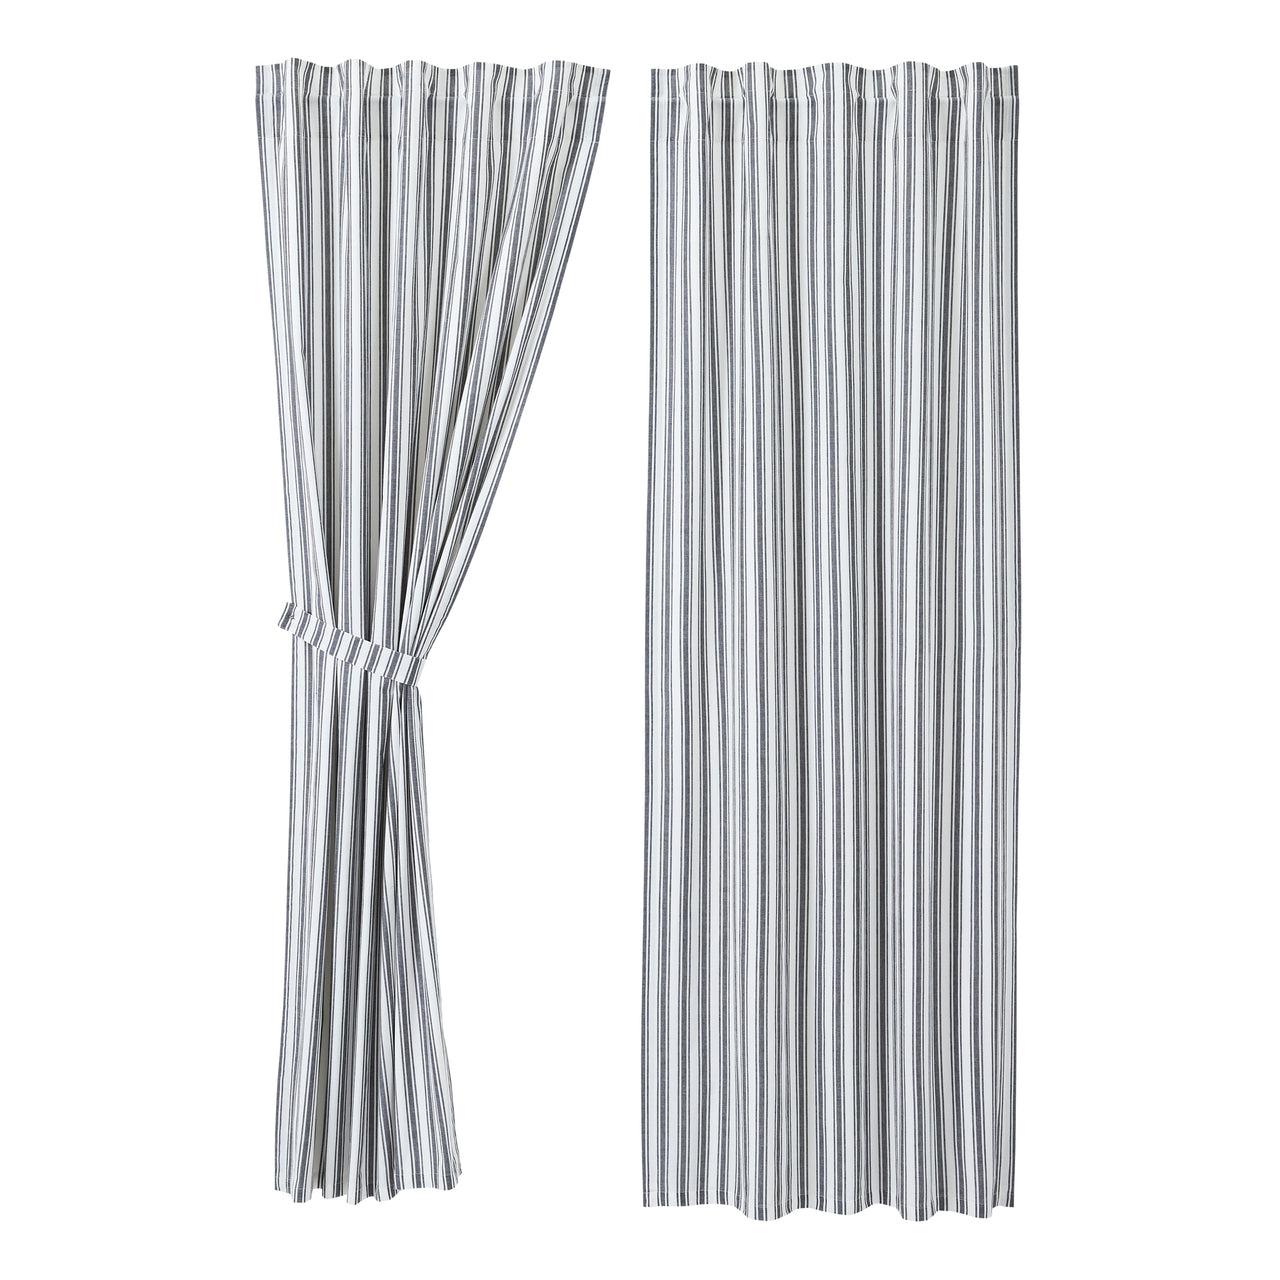 Sawyer Mill Black Ticking Stripe Panel Curtain Set of 2 84x40 VHC Brands